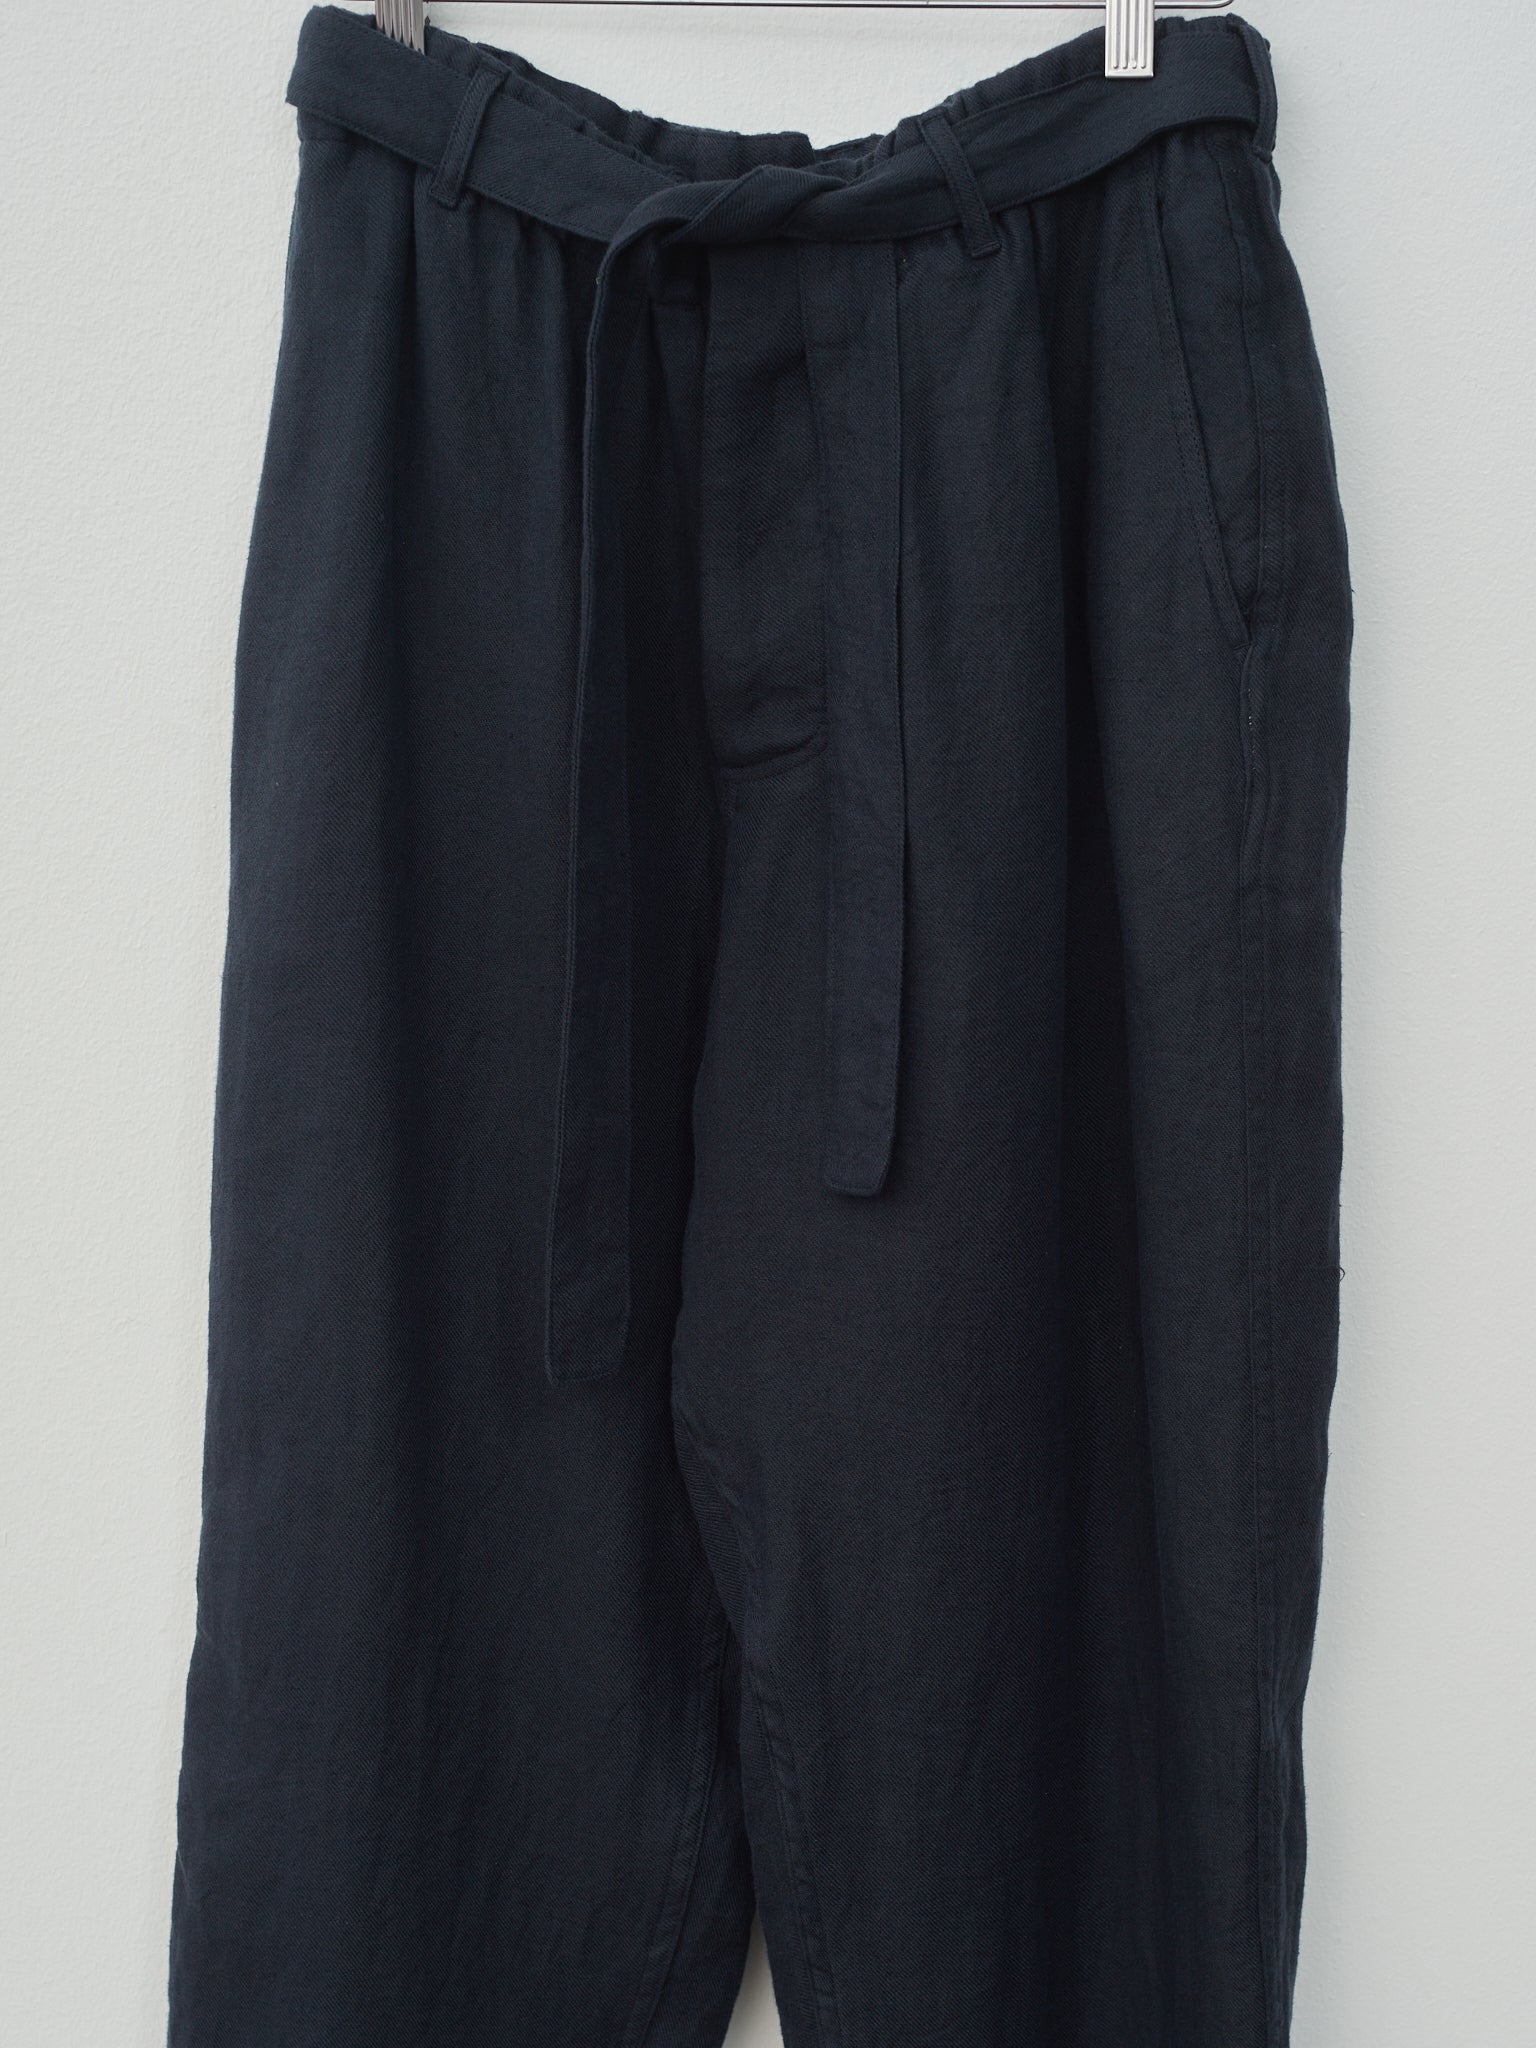 Namu Shop - Document Linen Relaxed Pants - Navy